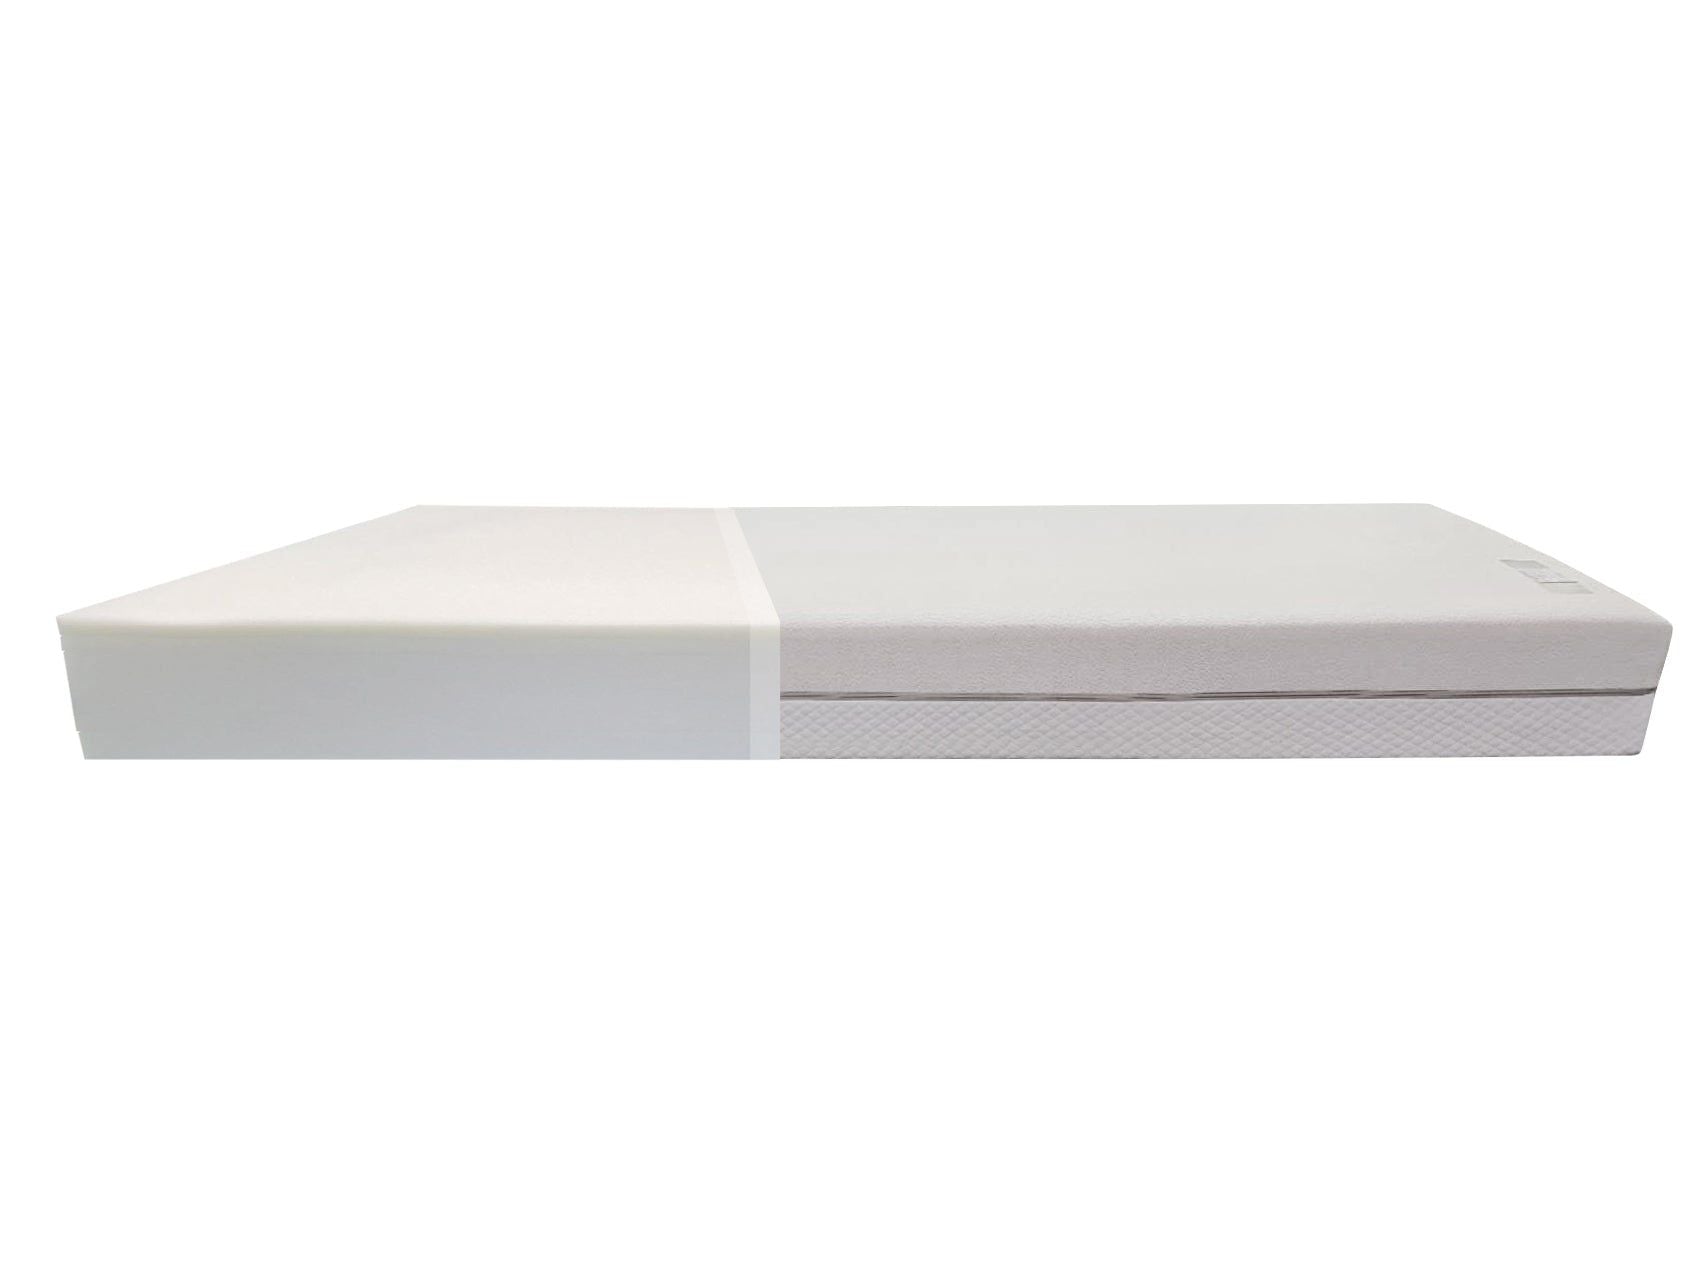 FLEXA Reversible spring mattress with cotton cover 200x90